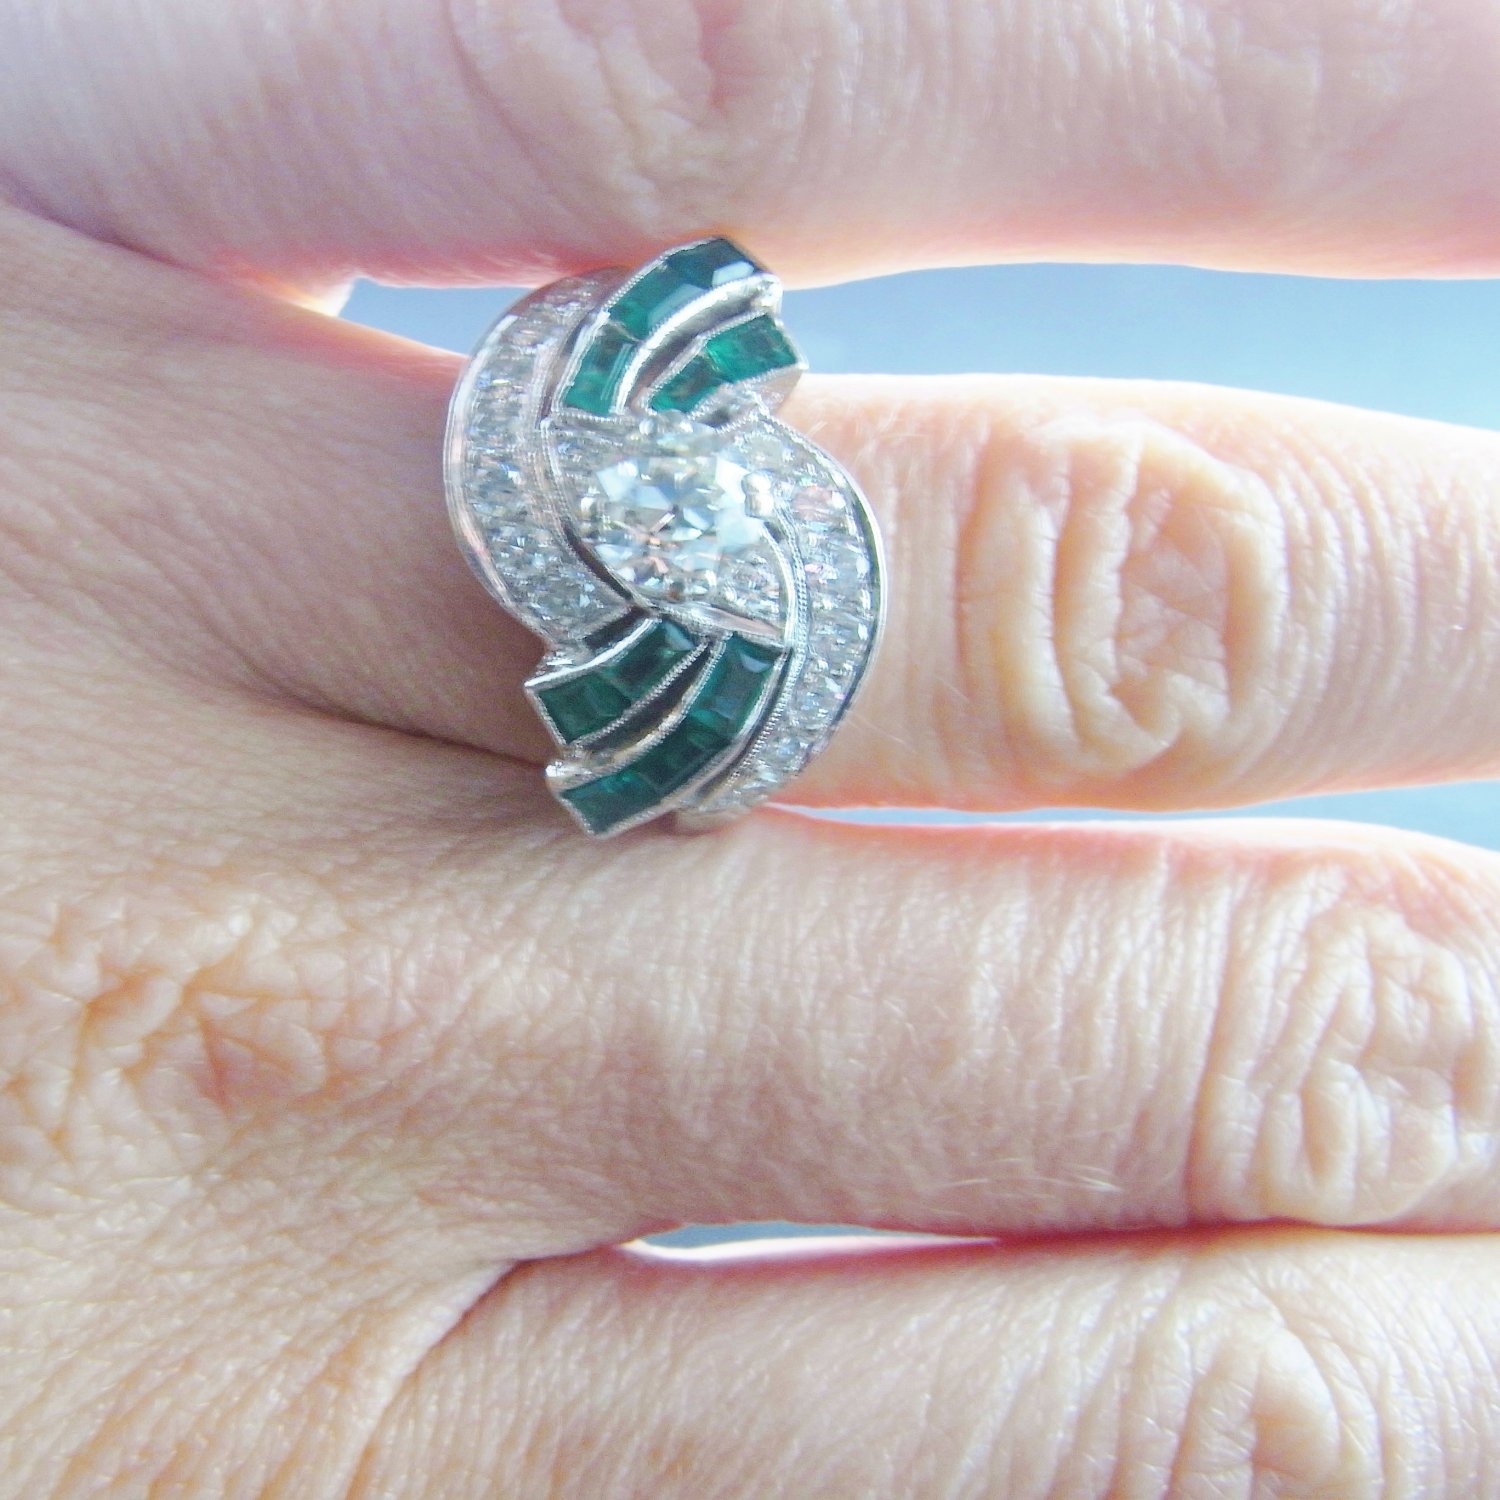 Emerald Art Deco Engagement Ring Diamond Emerald Engagement Ring Wedding Ring 1920s Engagement Ring 1930s 1940s Gatsby Downton Abbey Luxury High End OMC OEC European Cut Old Cut Rare